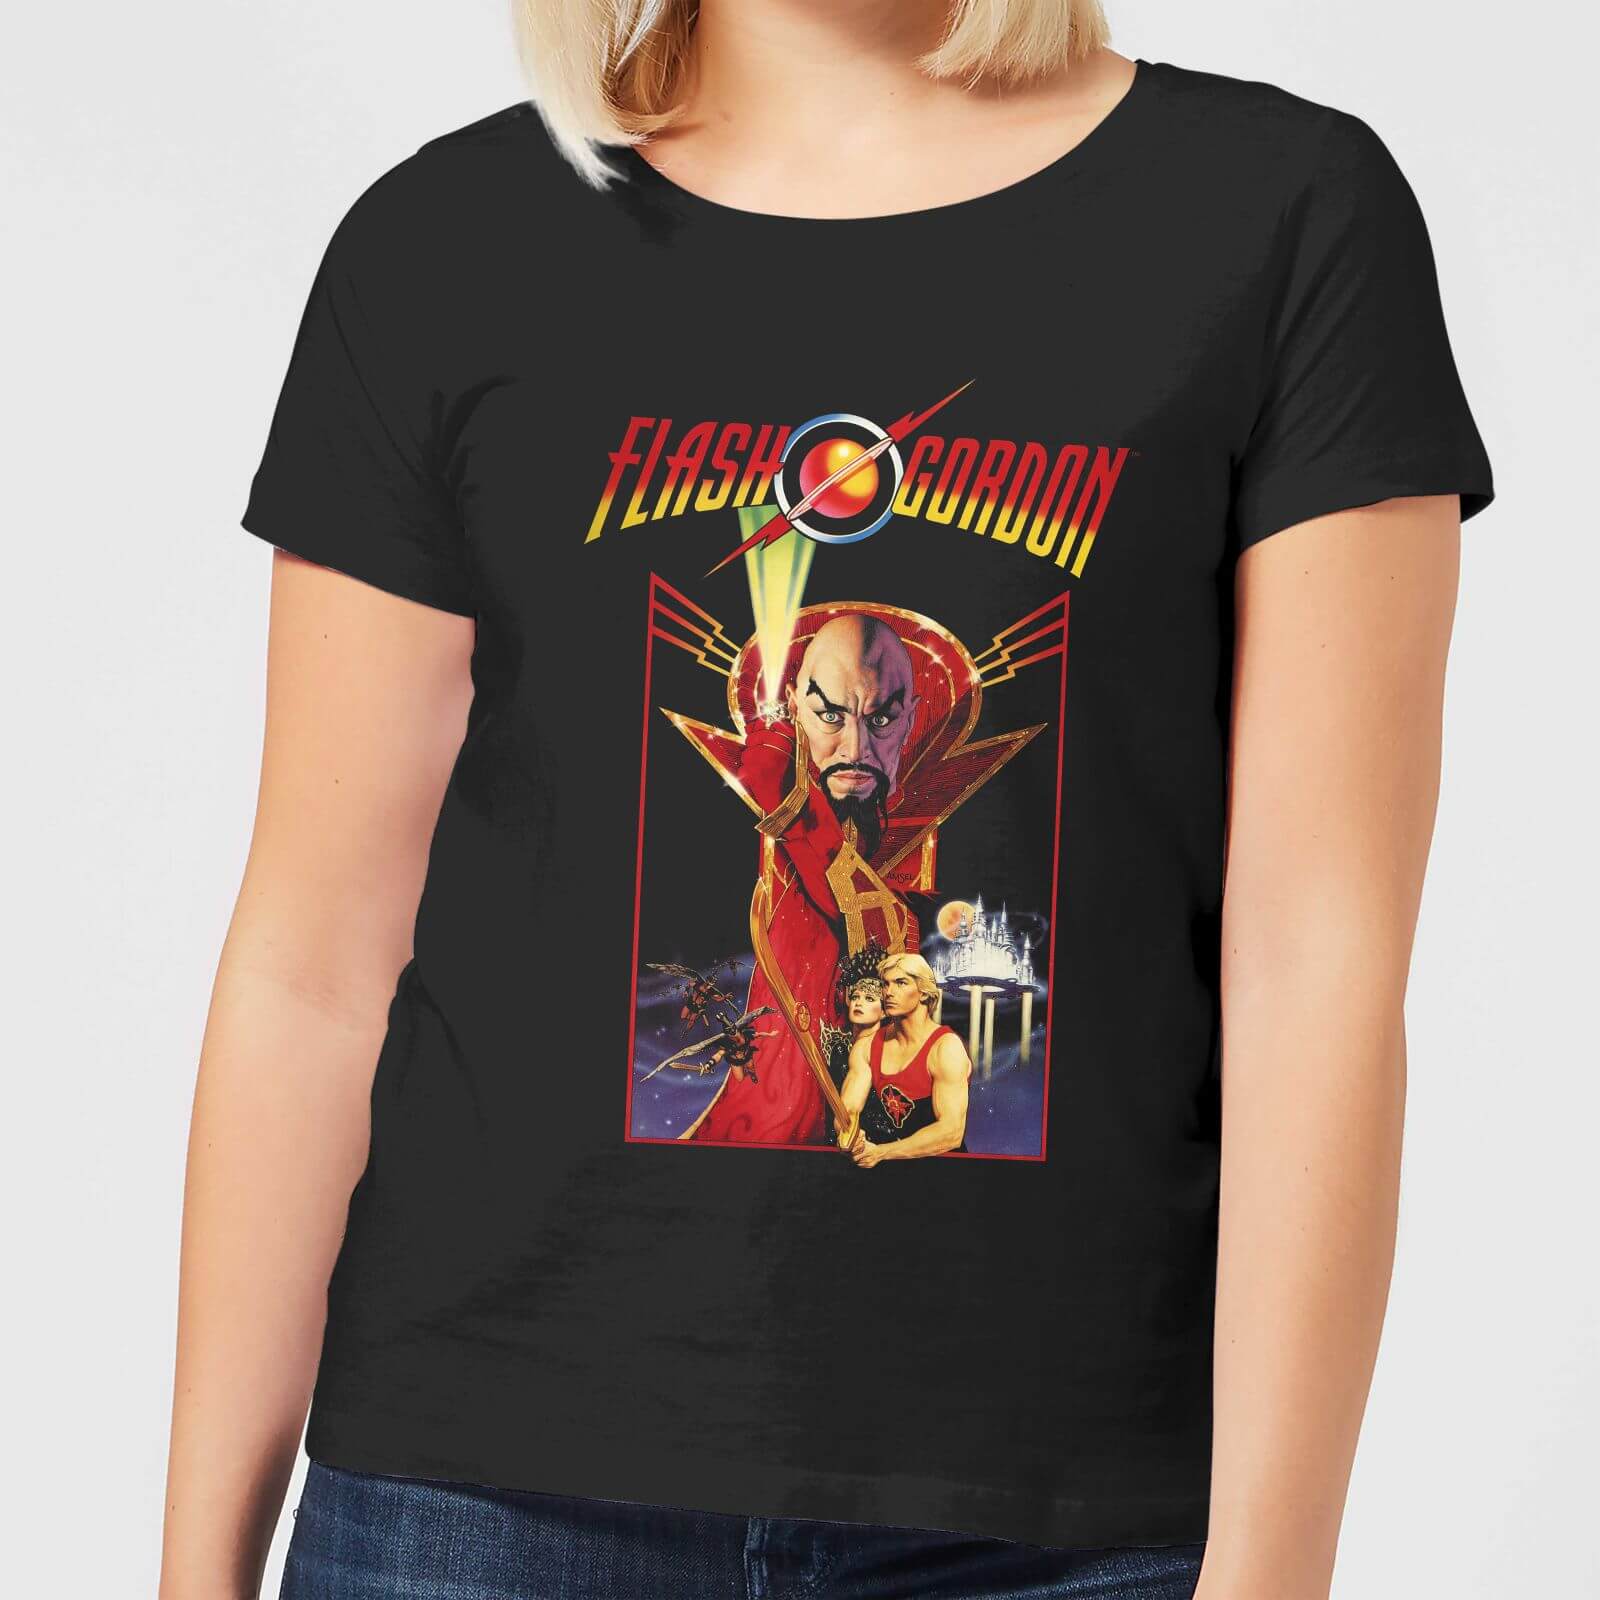 Flash Gordon Retro Movie Women's T-Shirt - Black - M